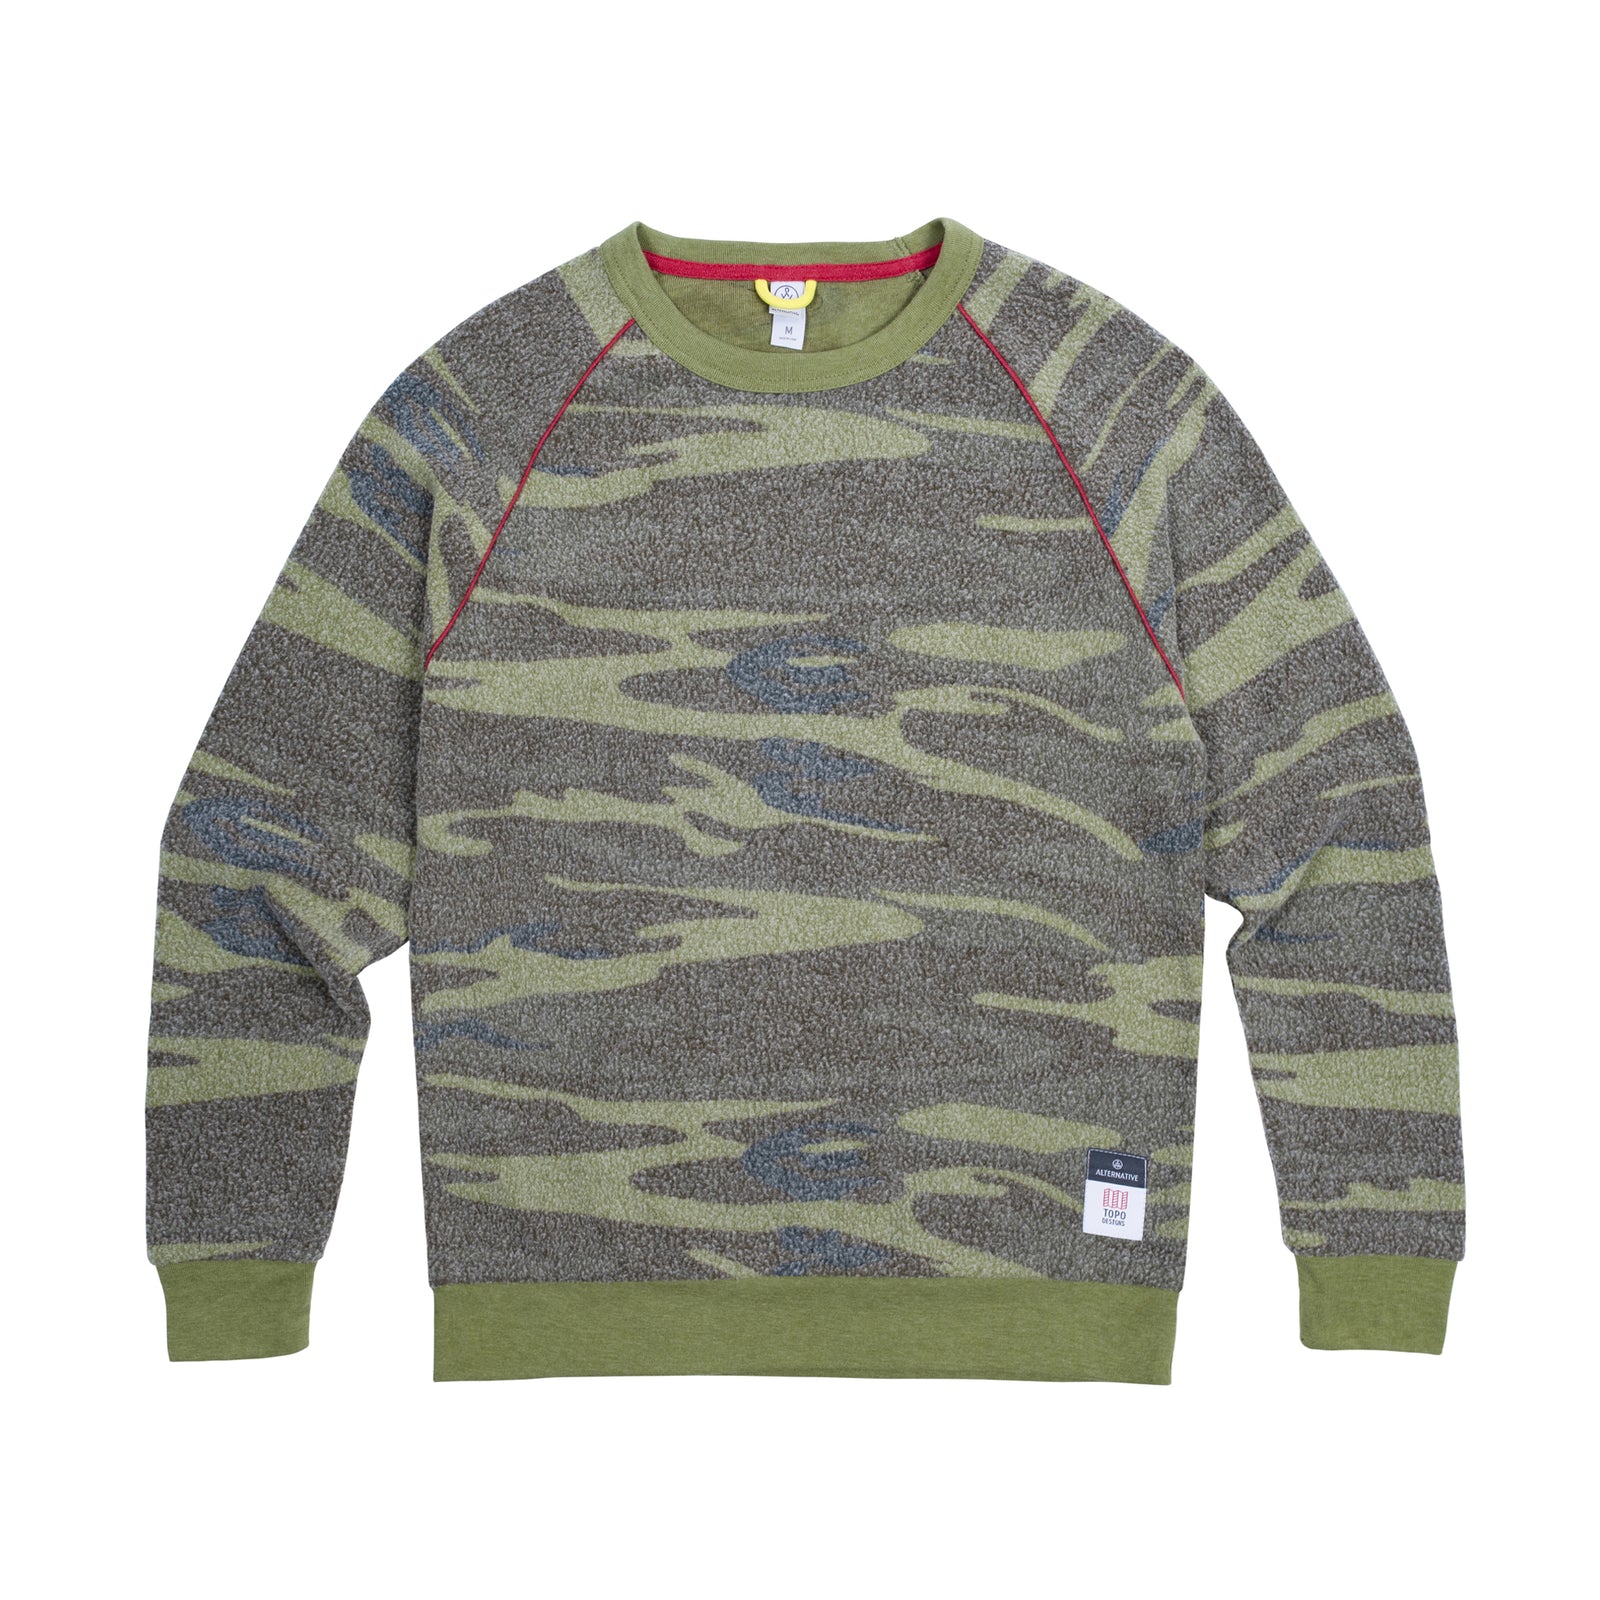 Front product shot of Topo Designs x Alternative Champ Eco-Teddy Sweatshirt - Men's in camo.